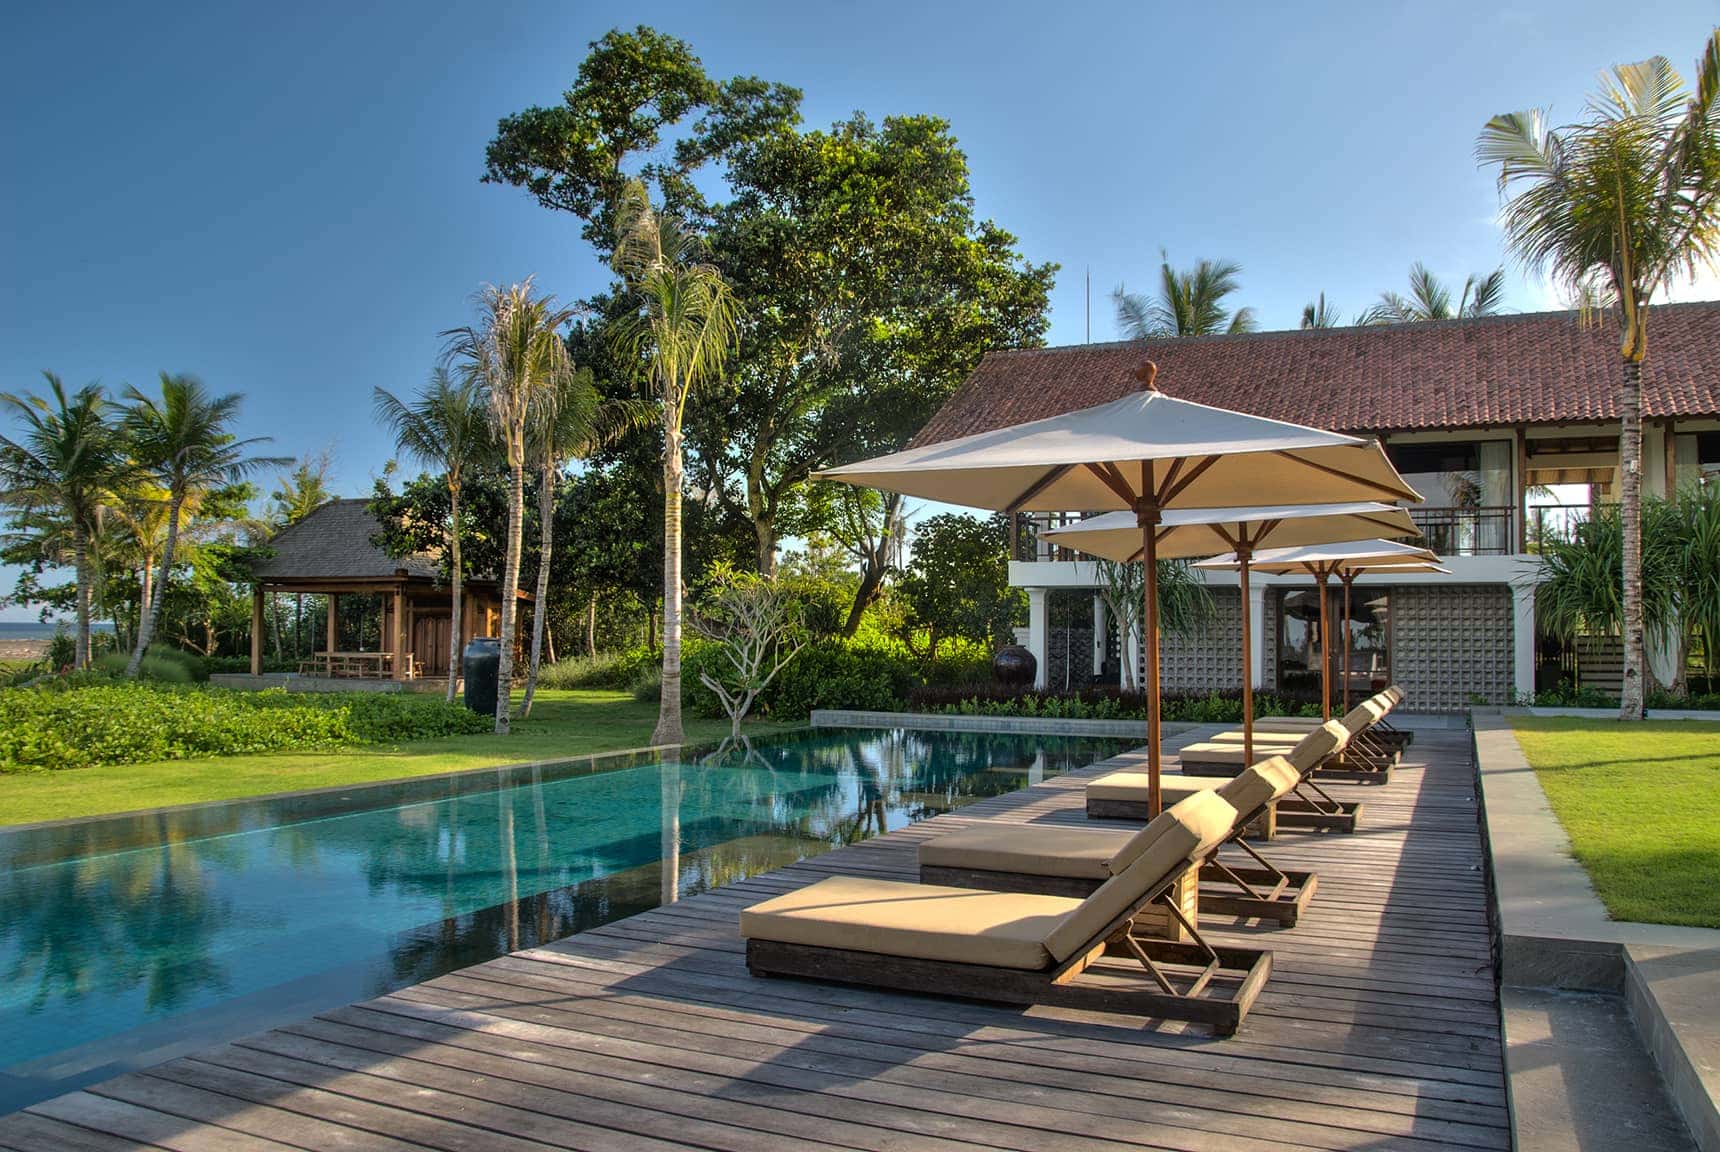 Jeeva Saba - Pantai Saba, Bali Indonesia (Bali villa photography by master photographer Rick Carmichael of LuxViz)